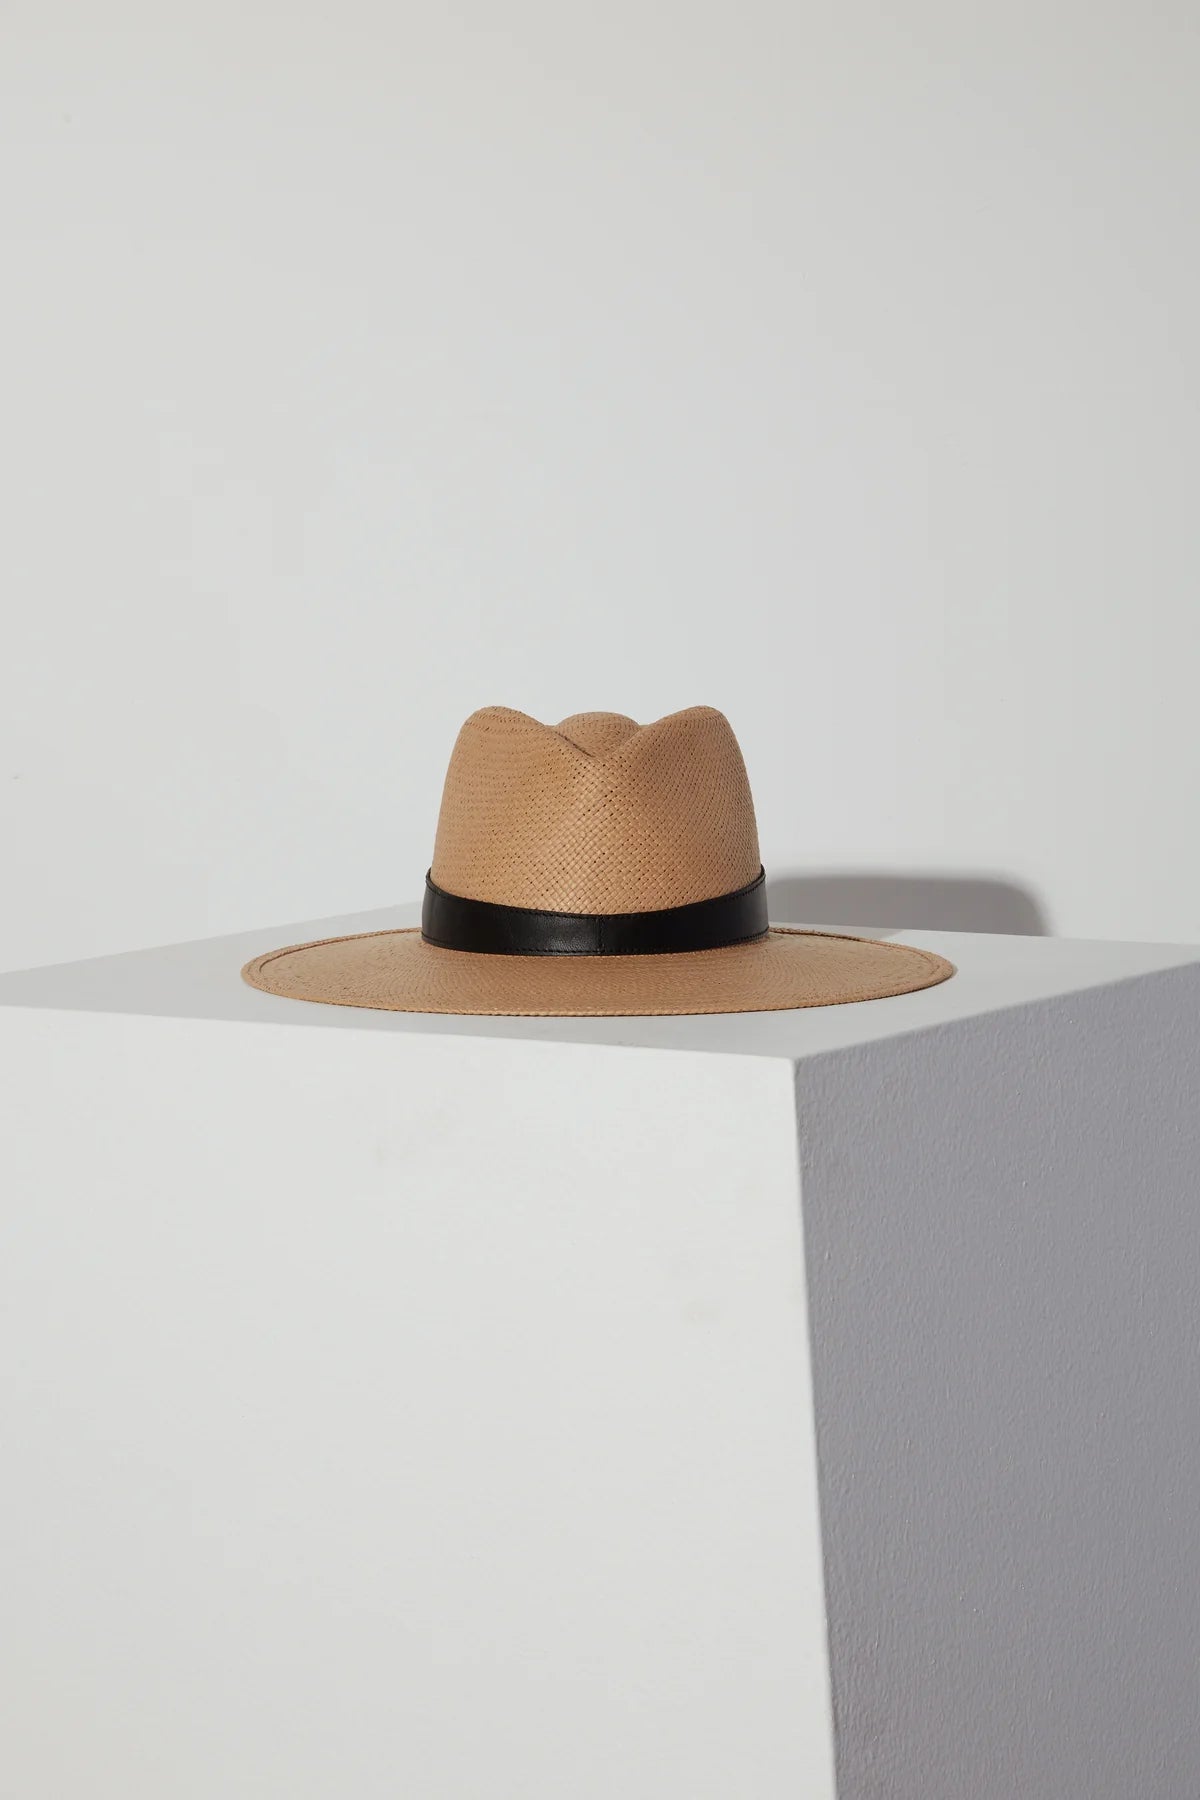 Savannah Packable Straw Hat